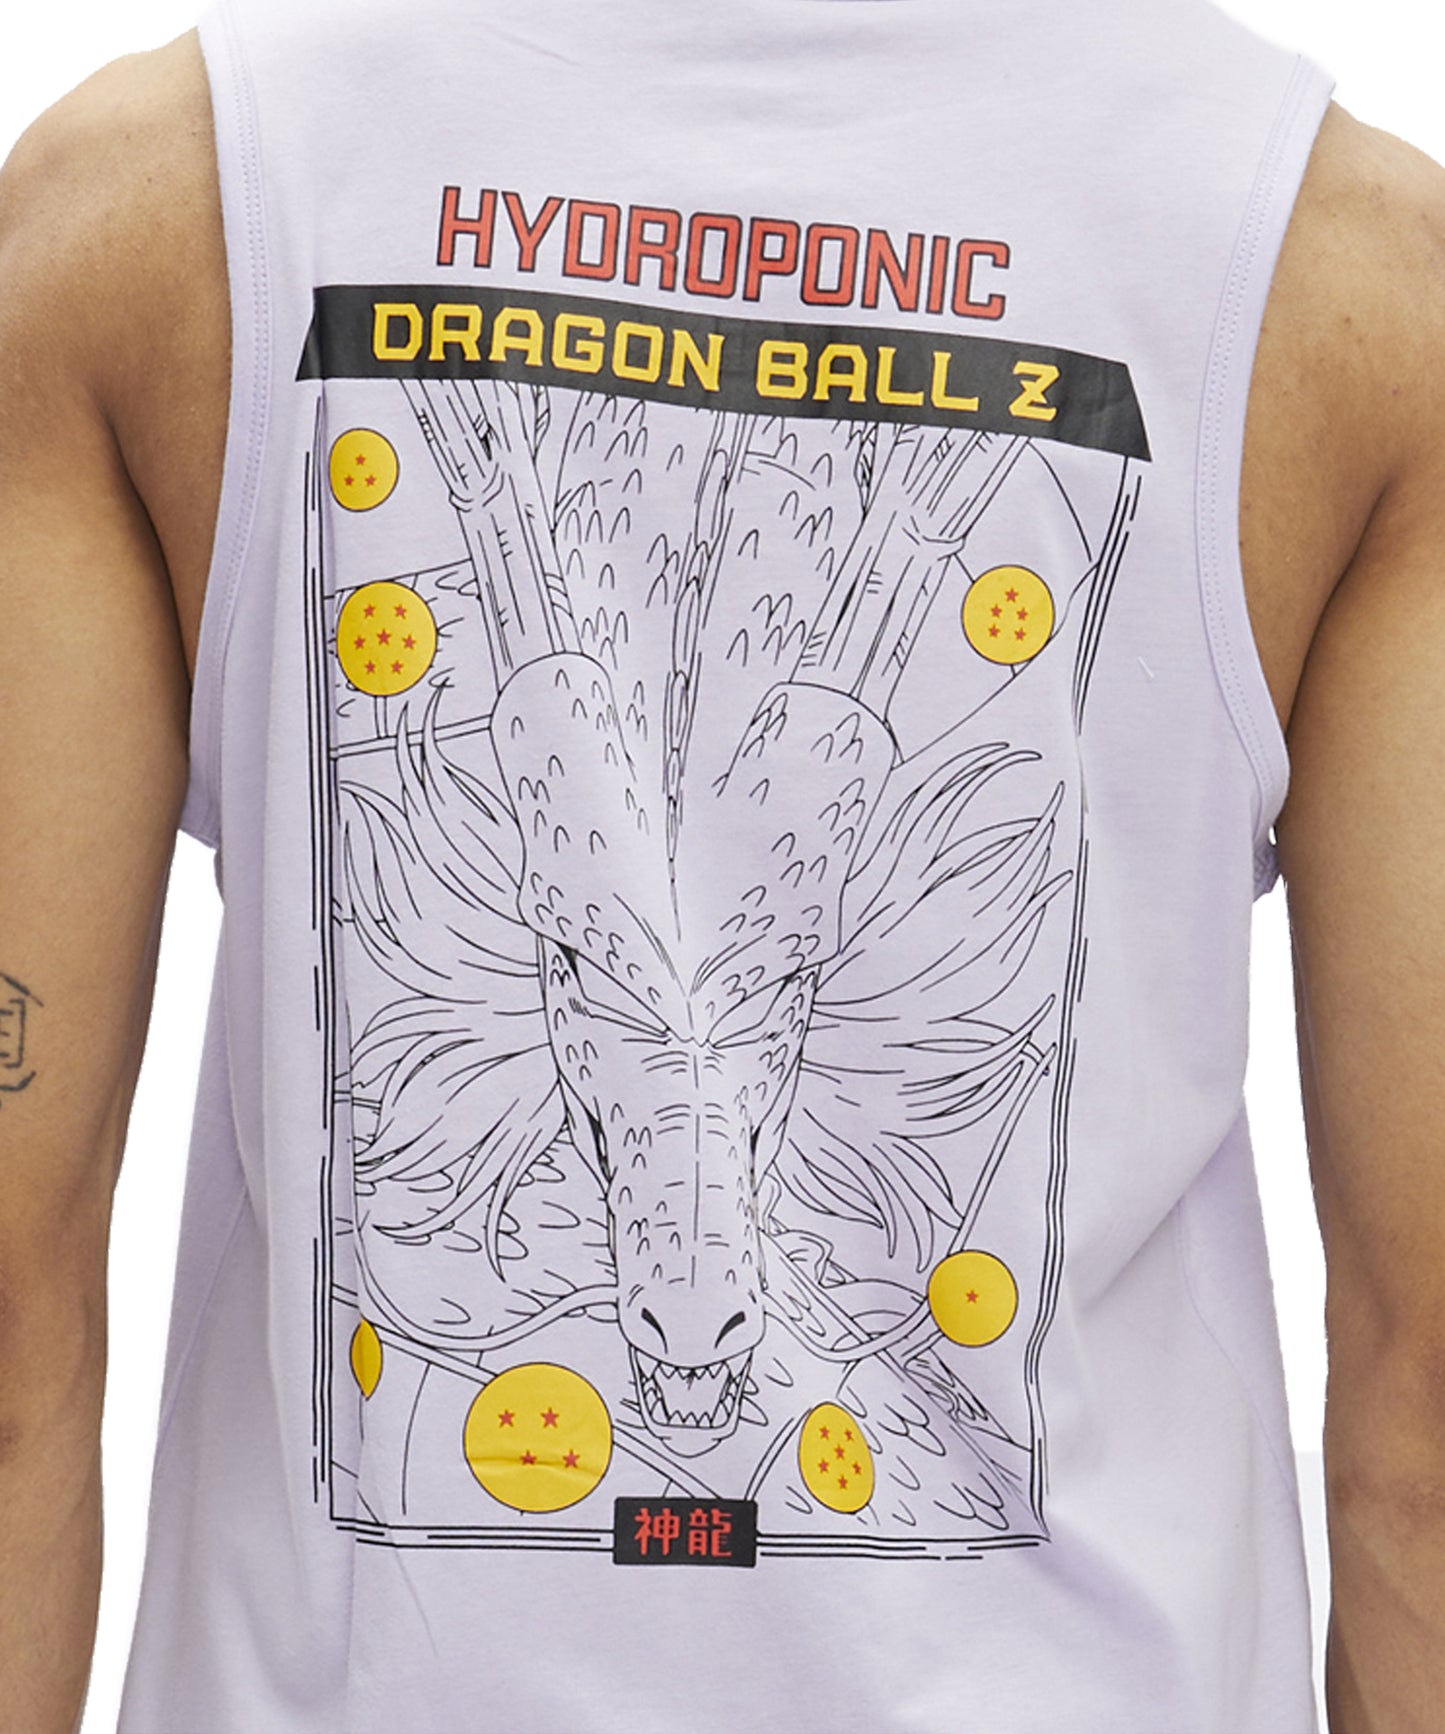 hydroponic-camiseta-de-tirantes-dragon-ball-z-shenron-color-púrpura-serigrafía-dragon-ball-en-la-espalda.